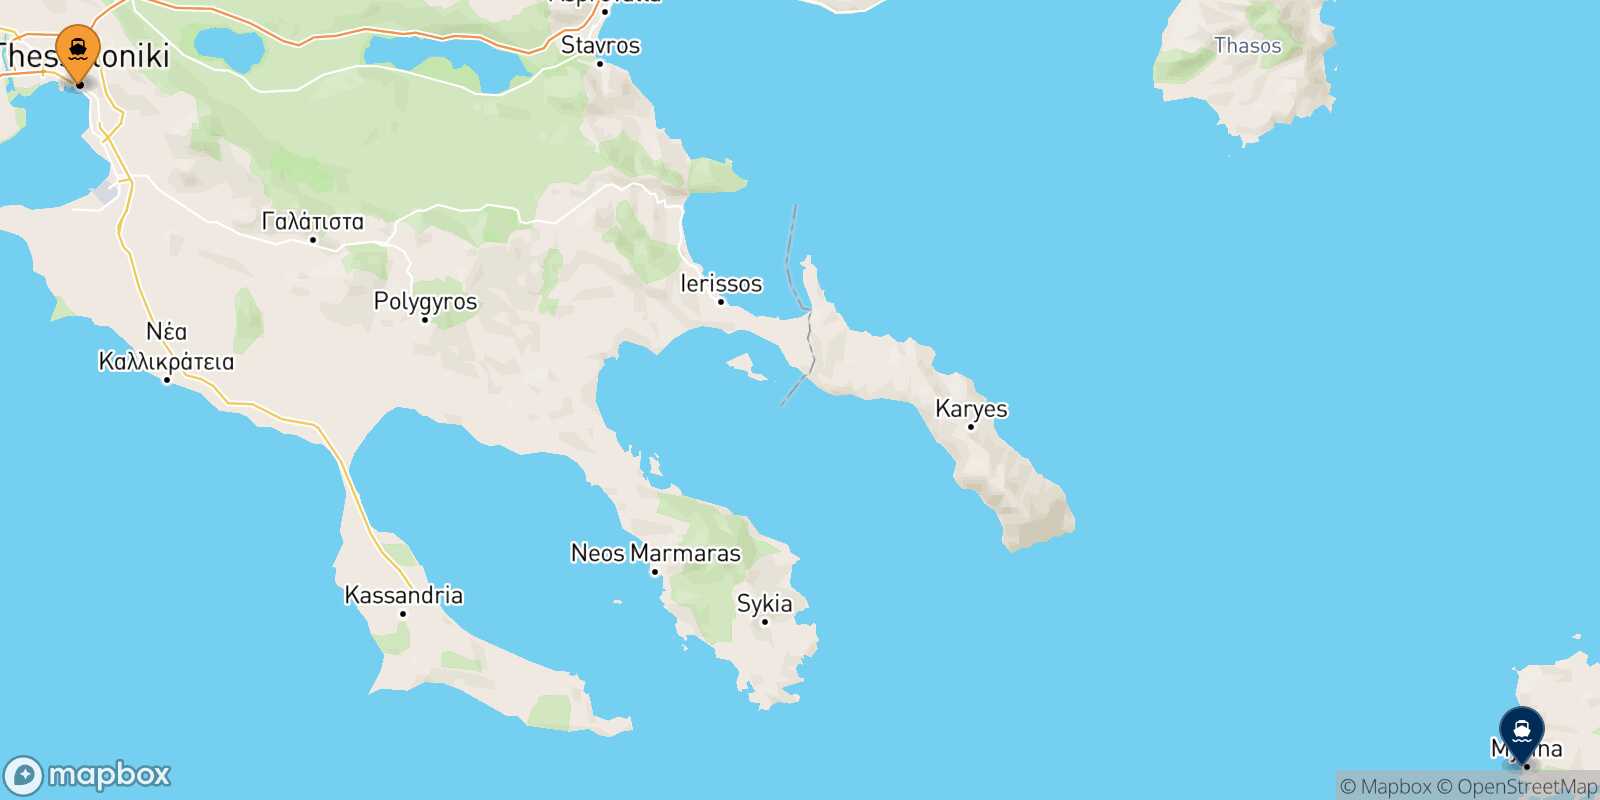 Thessaloniki Myrina (Limnos) route map